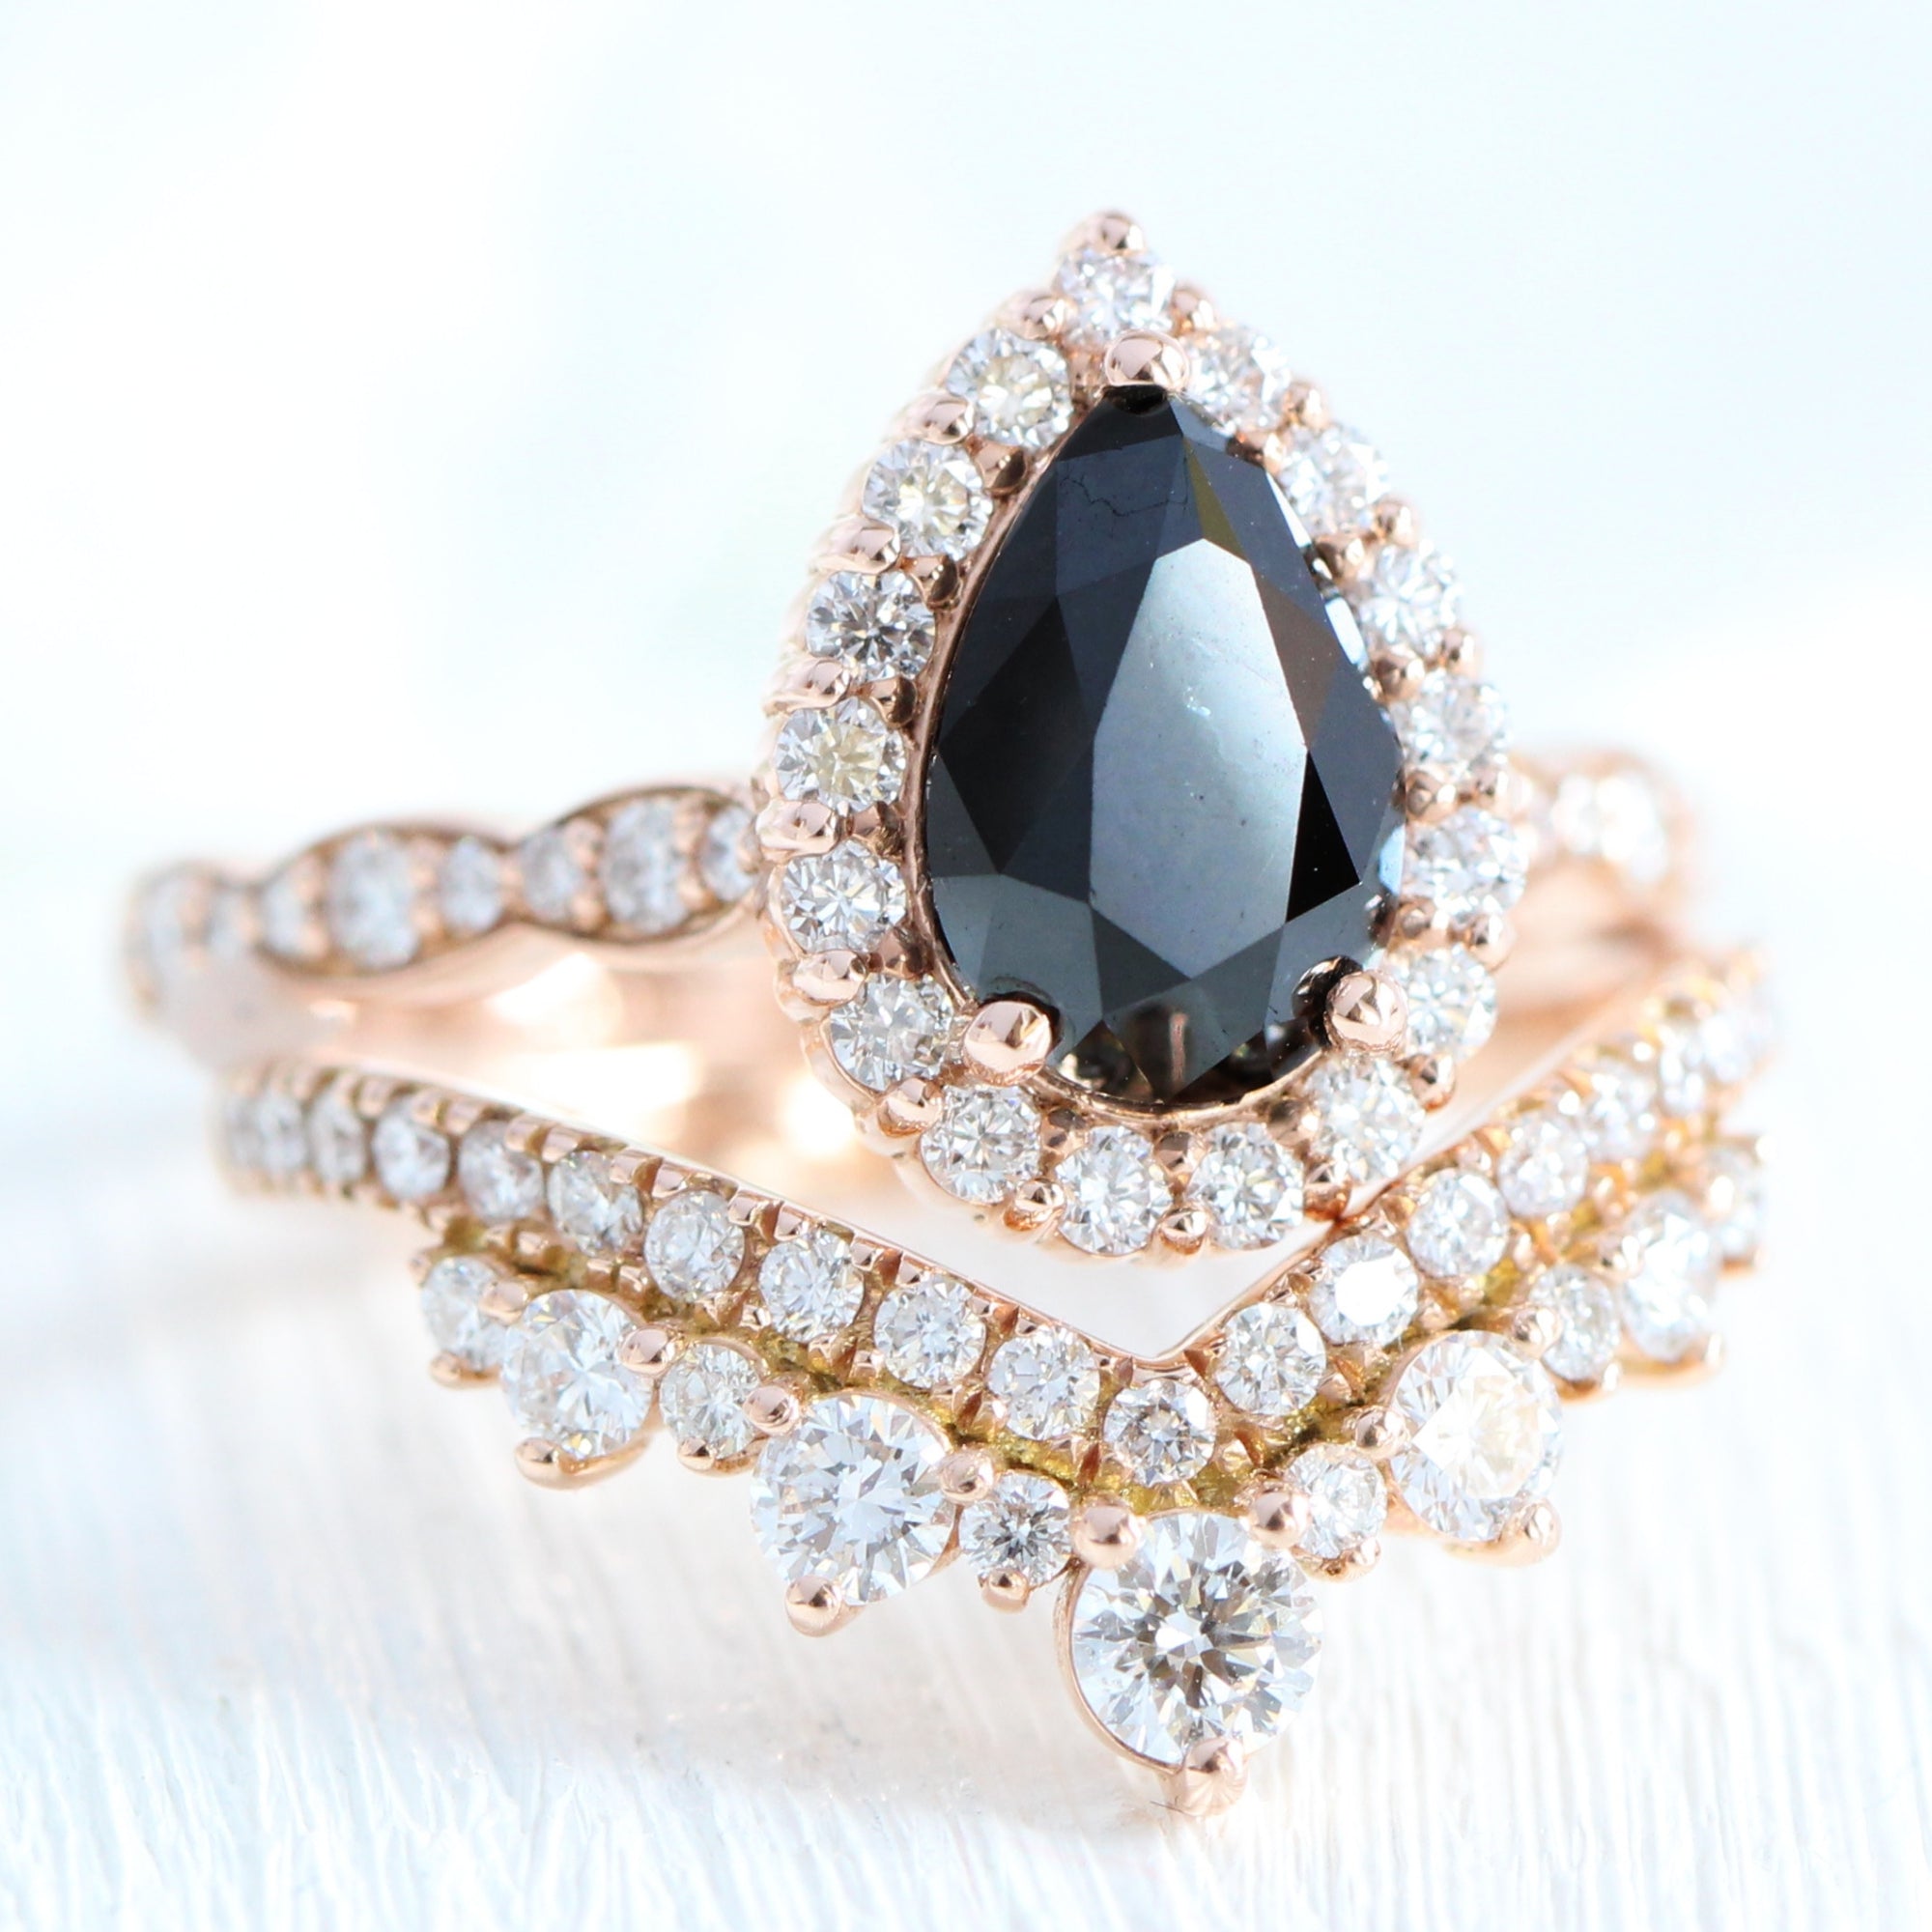 Pear black diamond engagement ring rose gold v shape diamond wedding band bridal ring set la more design jewelry